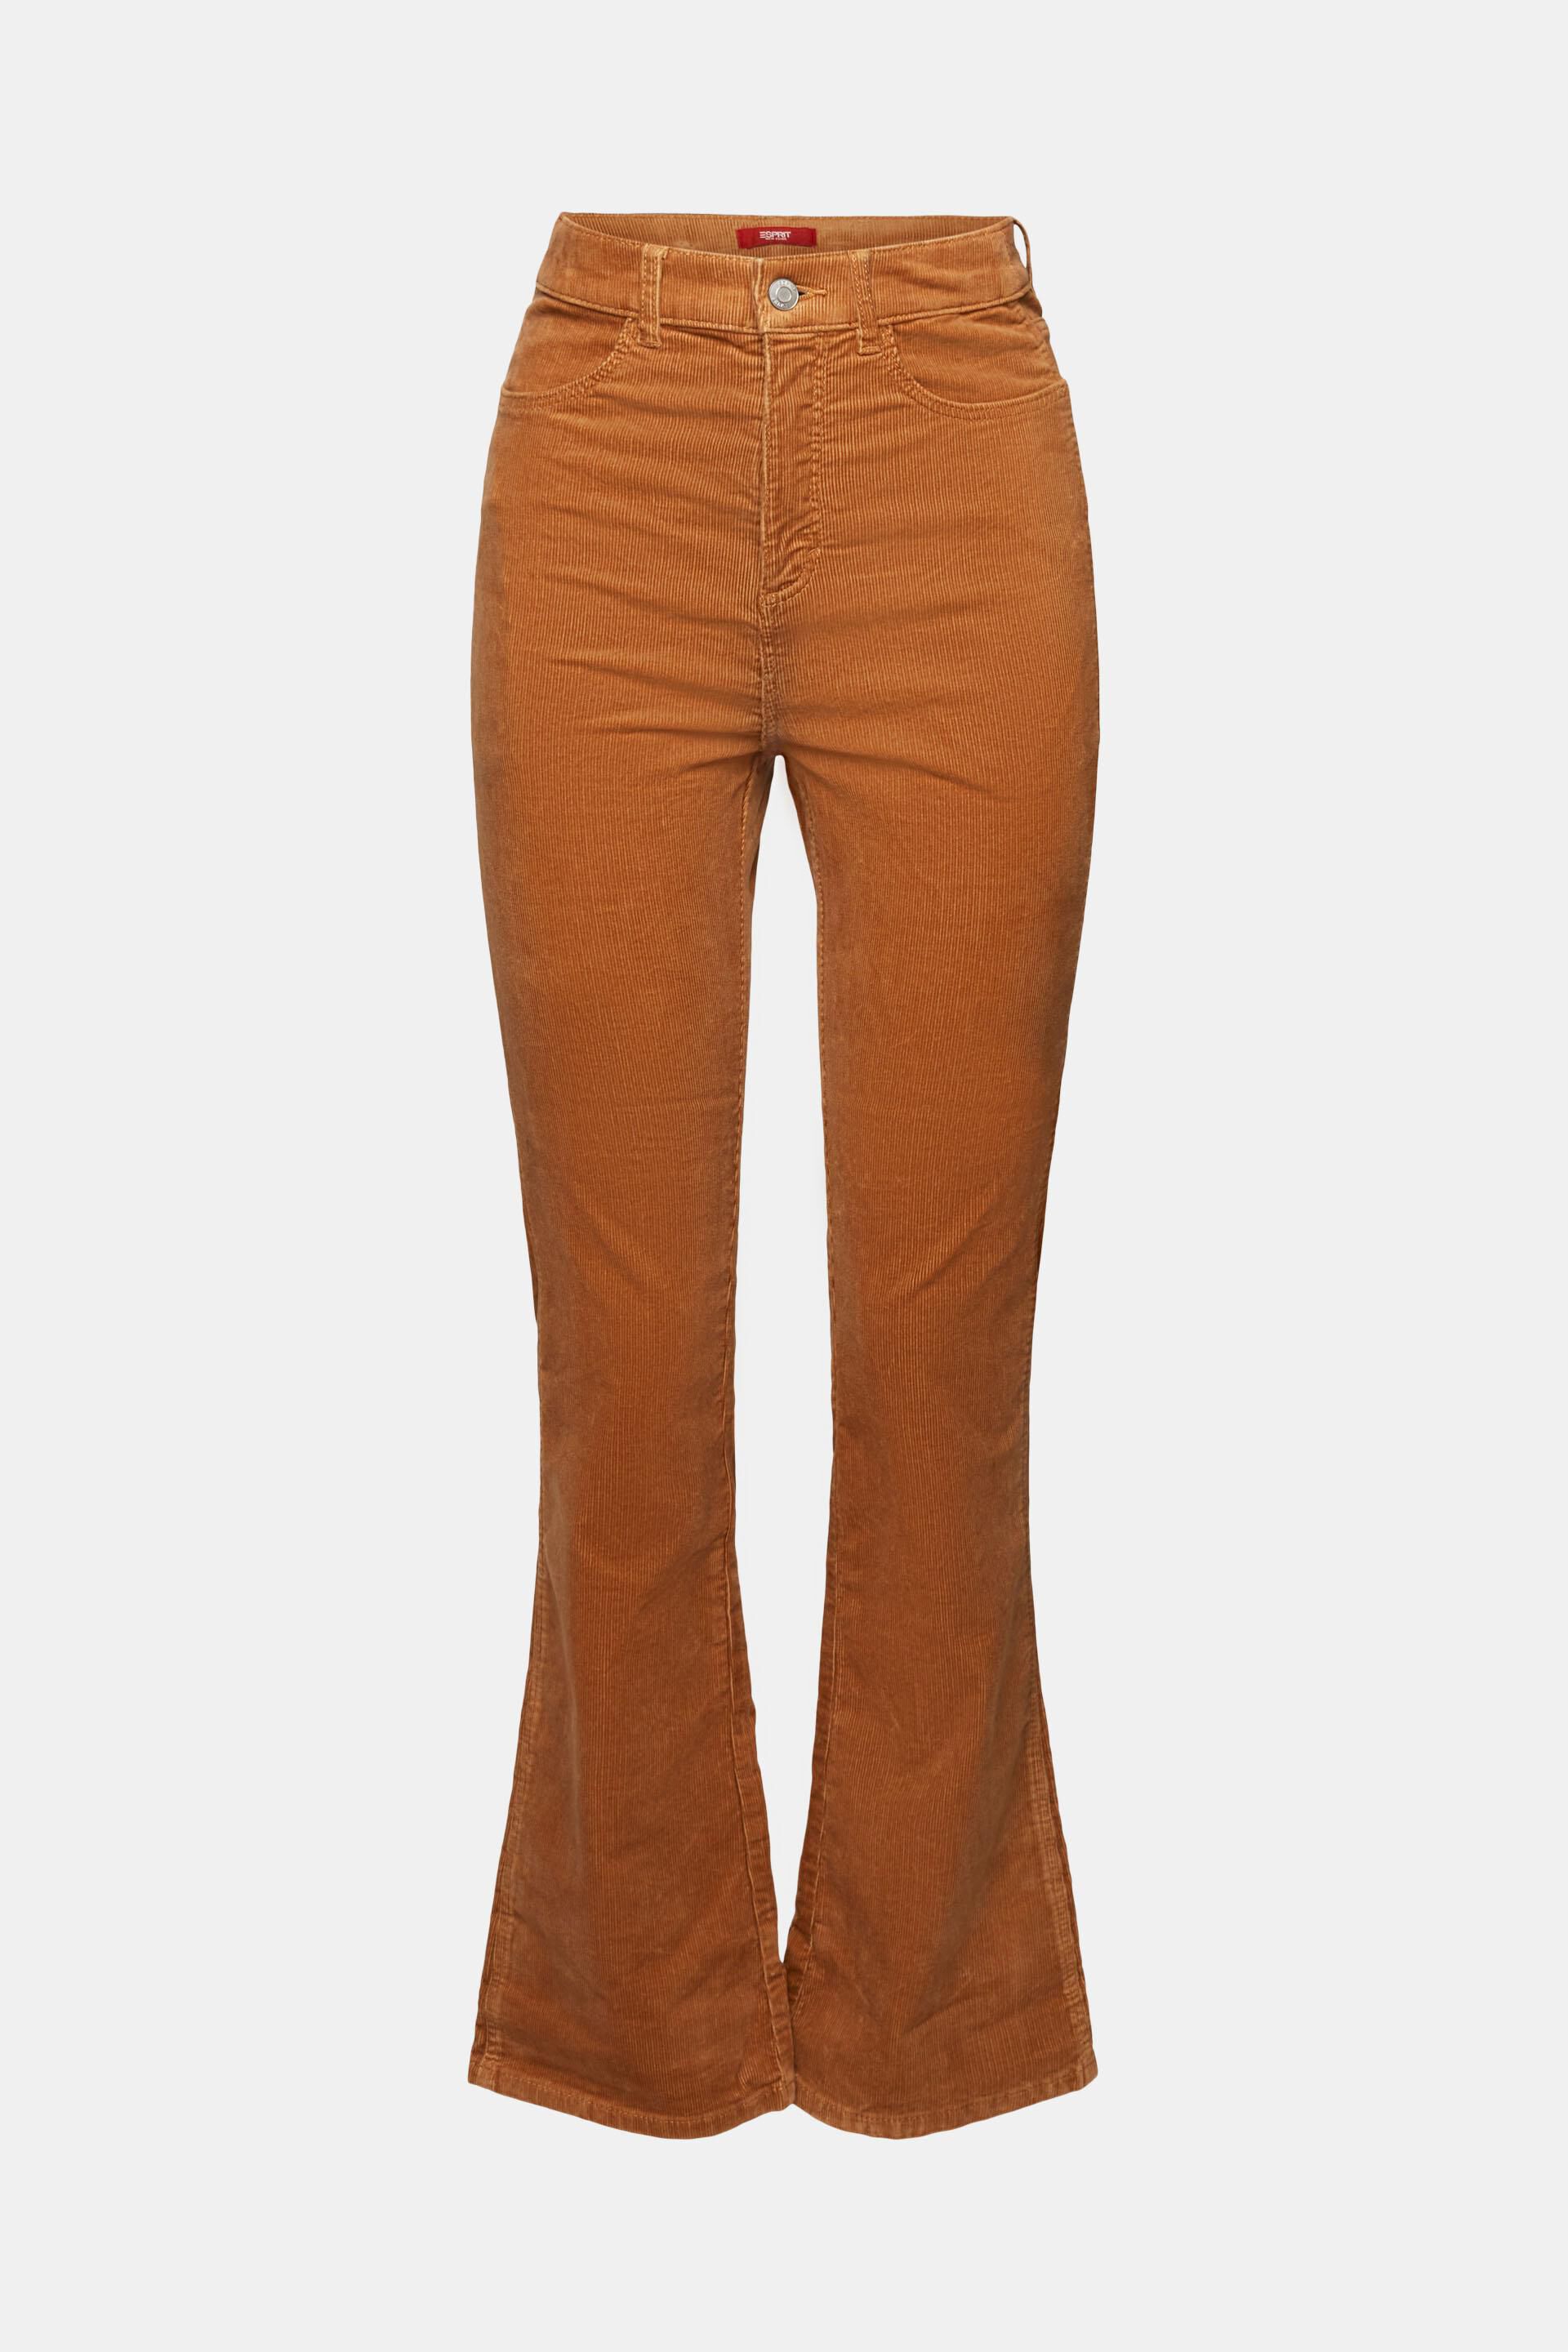 Cotton Rich Cord Wide Leg Trousers | M&S Collection | M&S